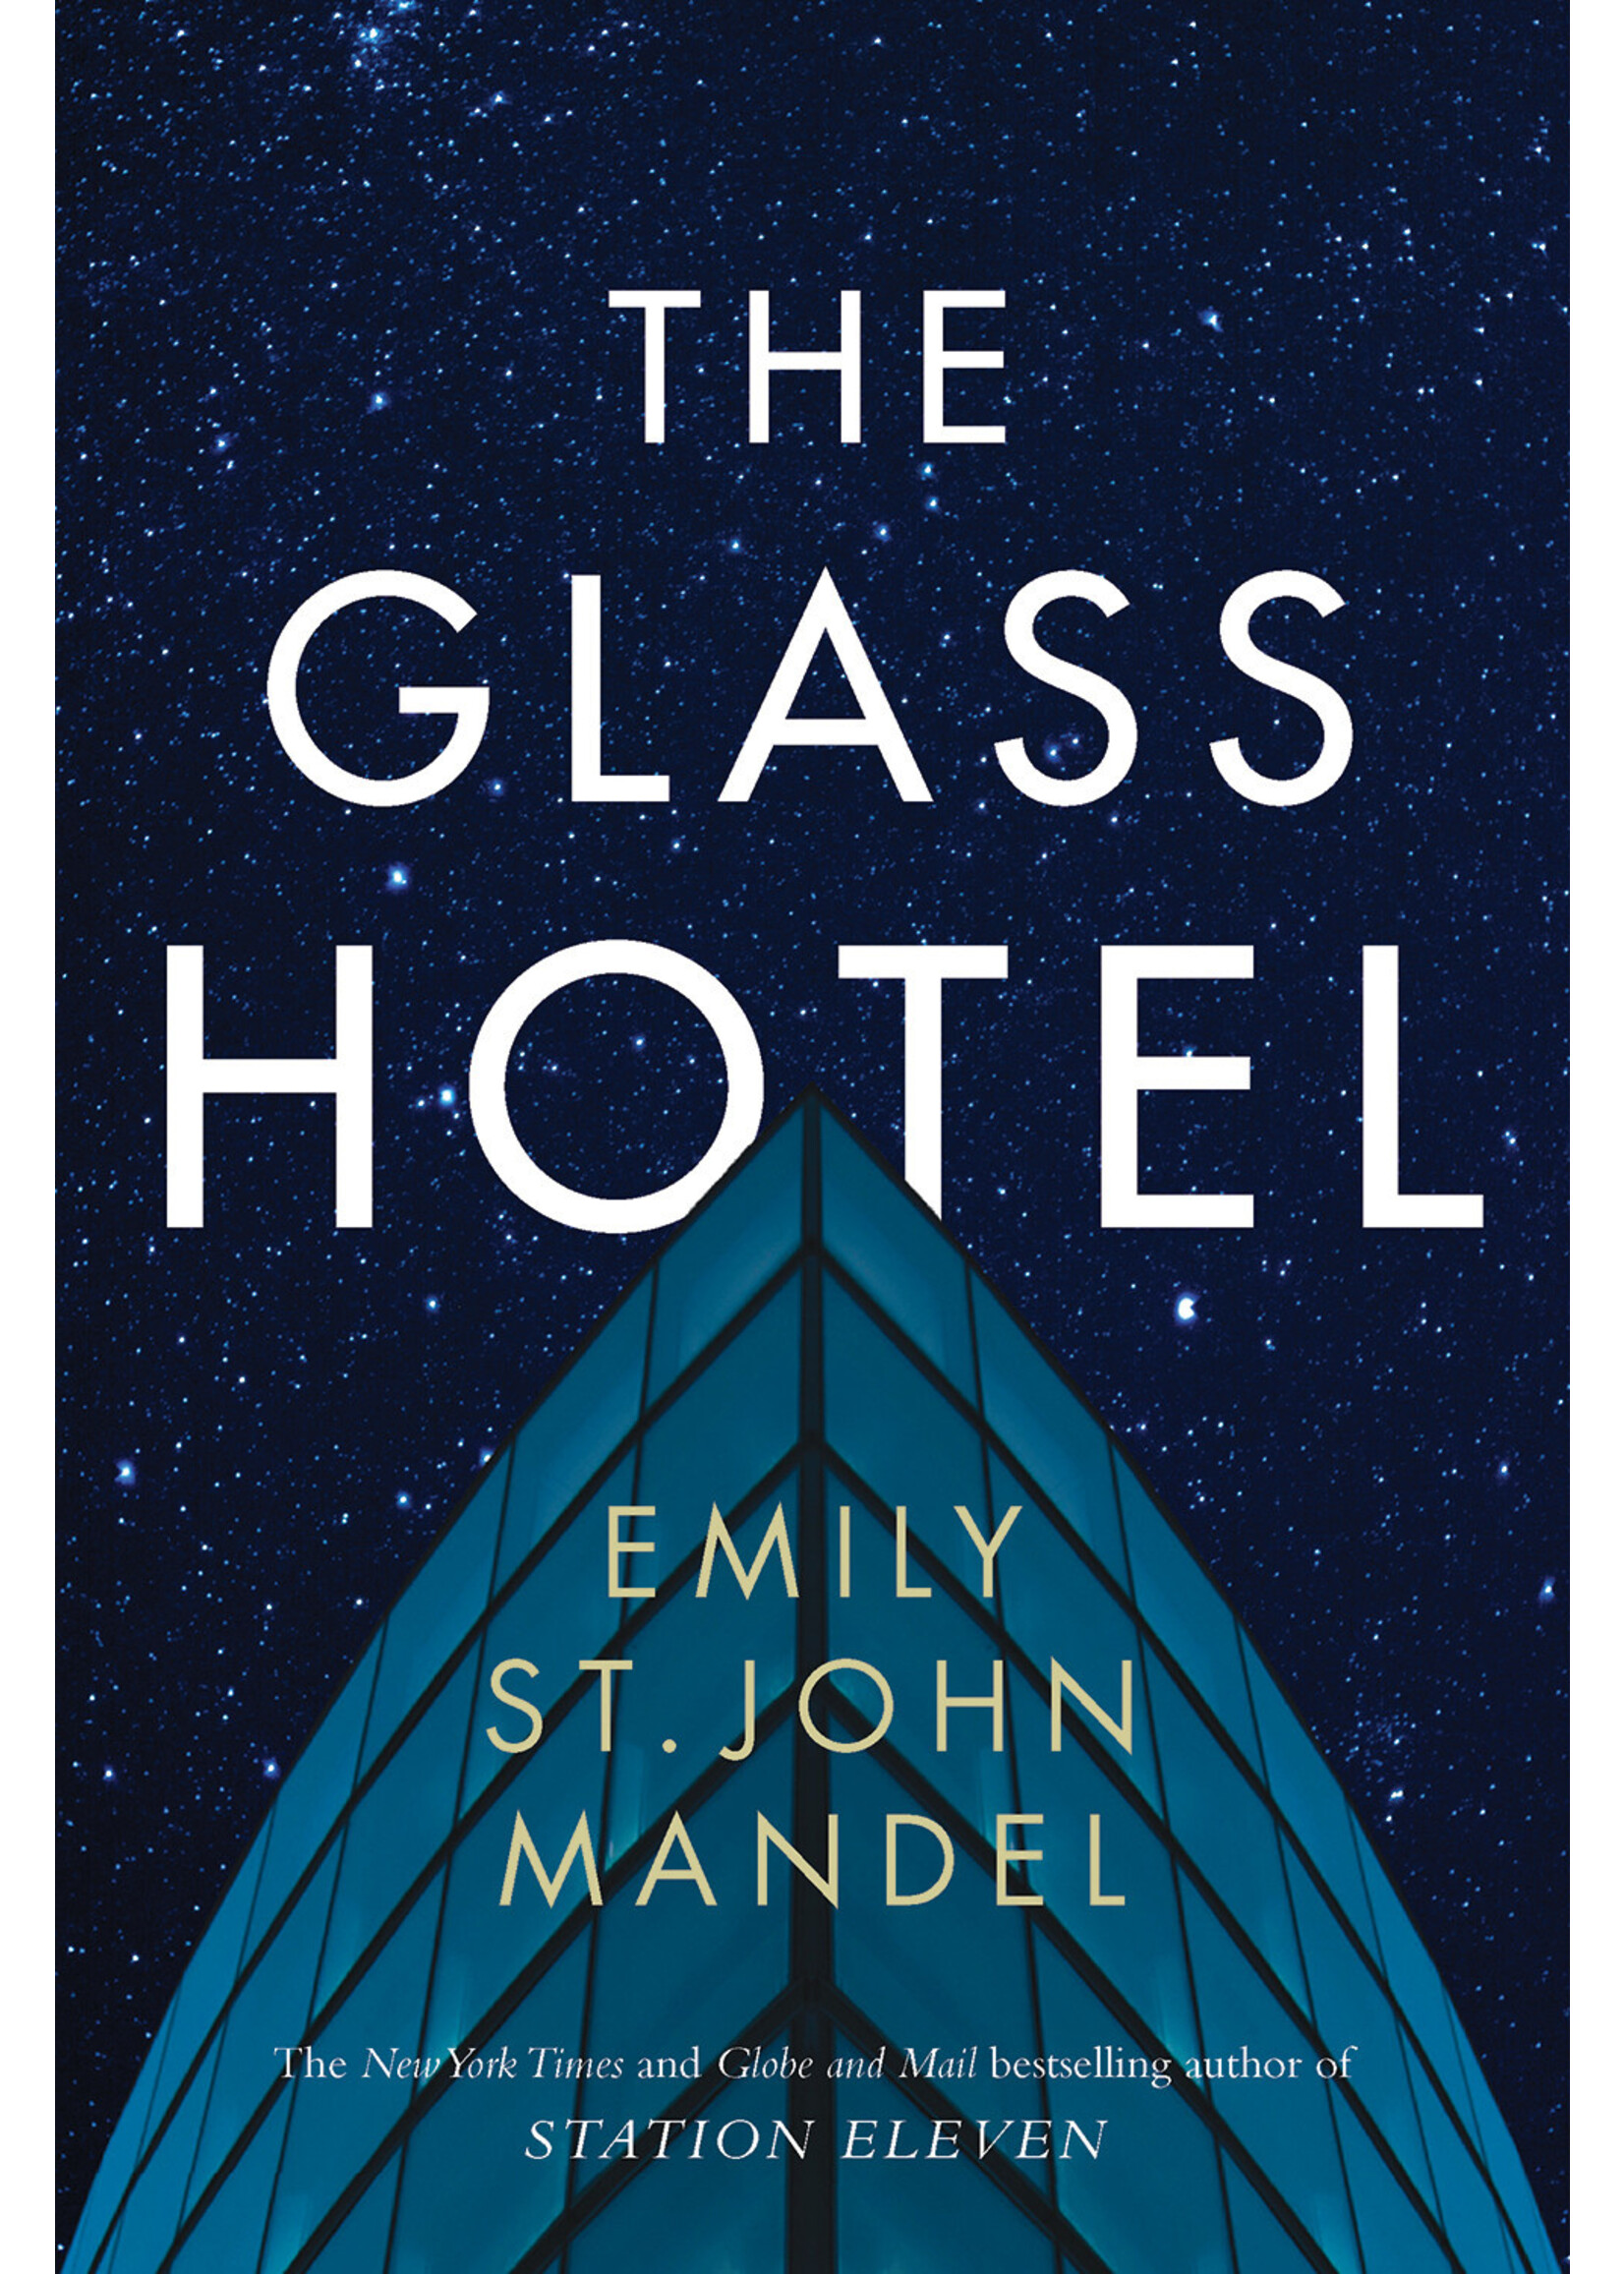 The Glass Hotel by Emily St. John Mandel